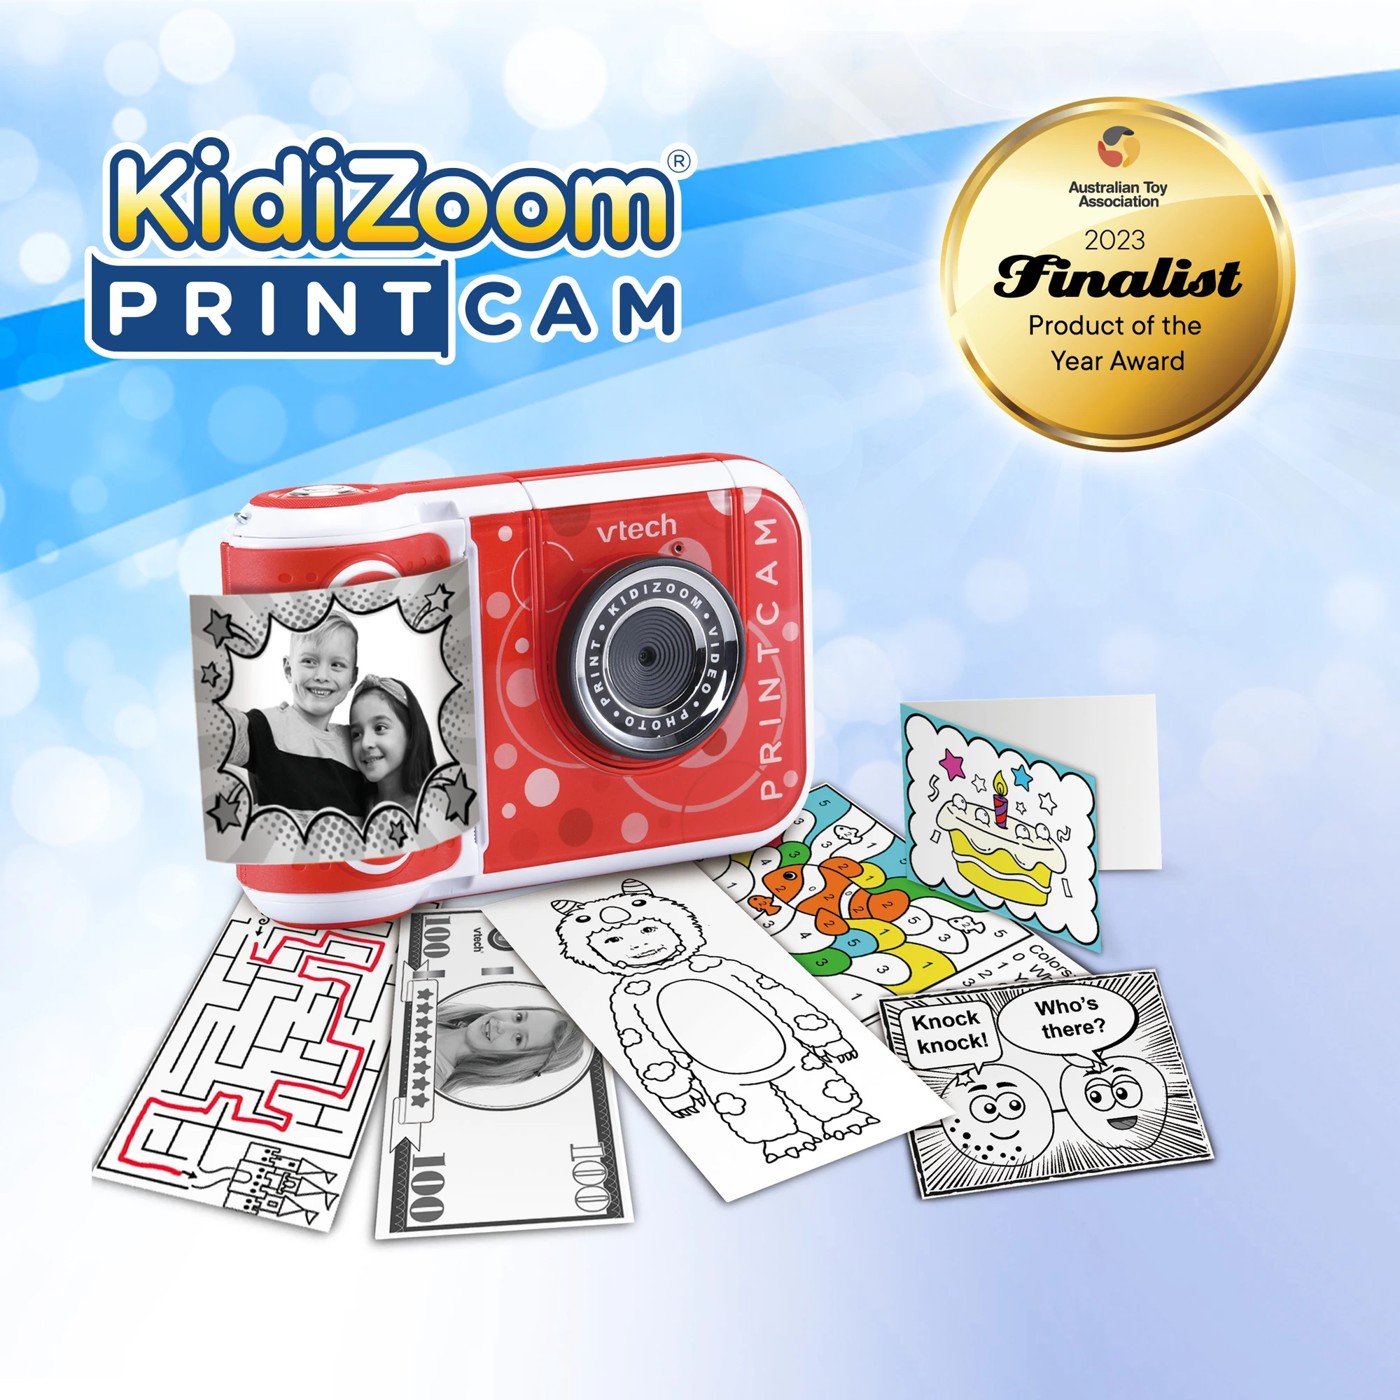 KidiZoom Print Cam V-Tech